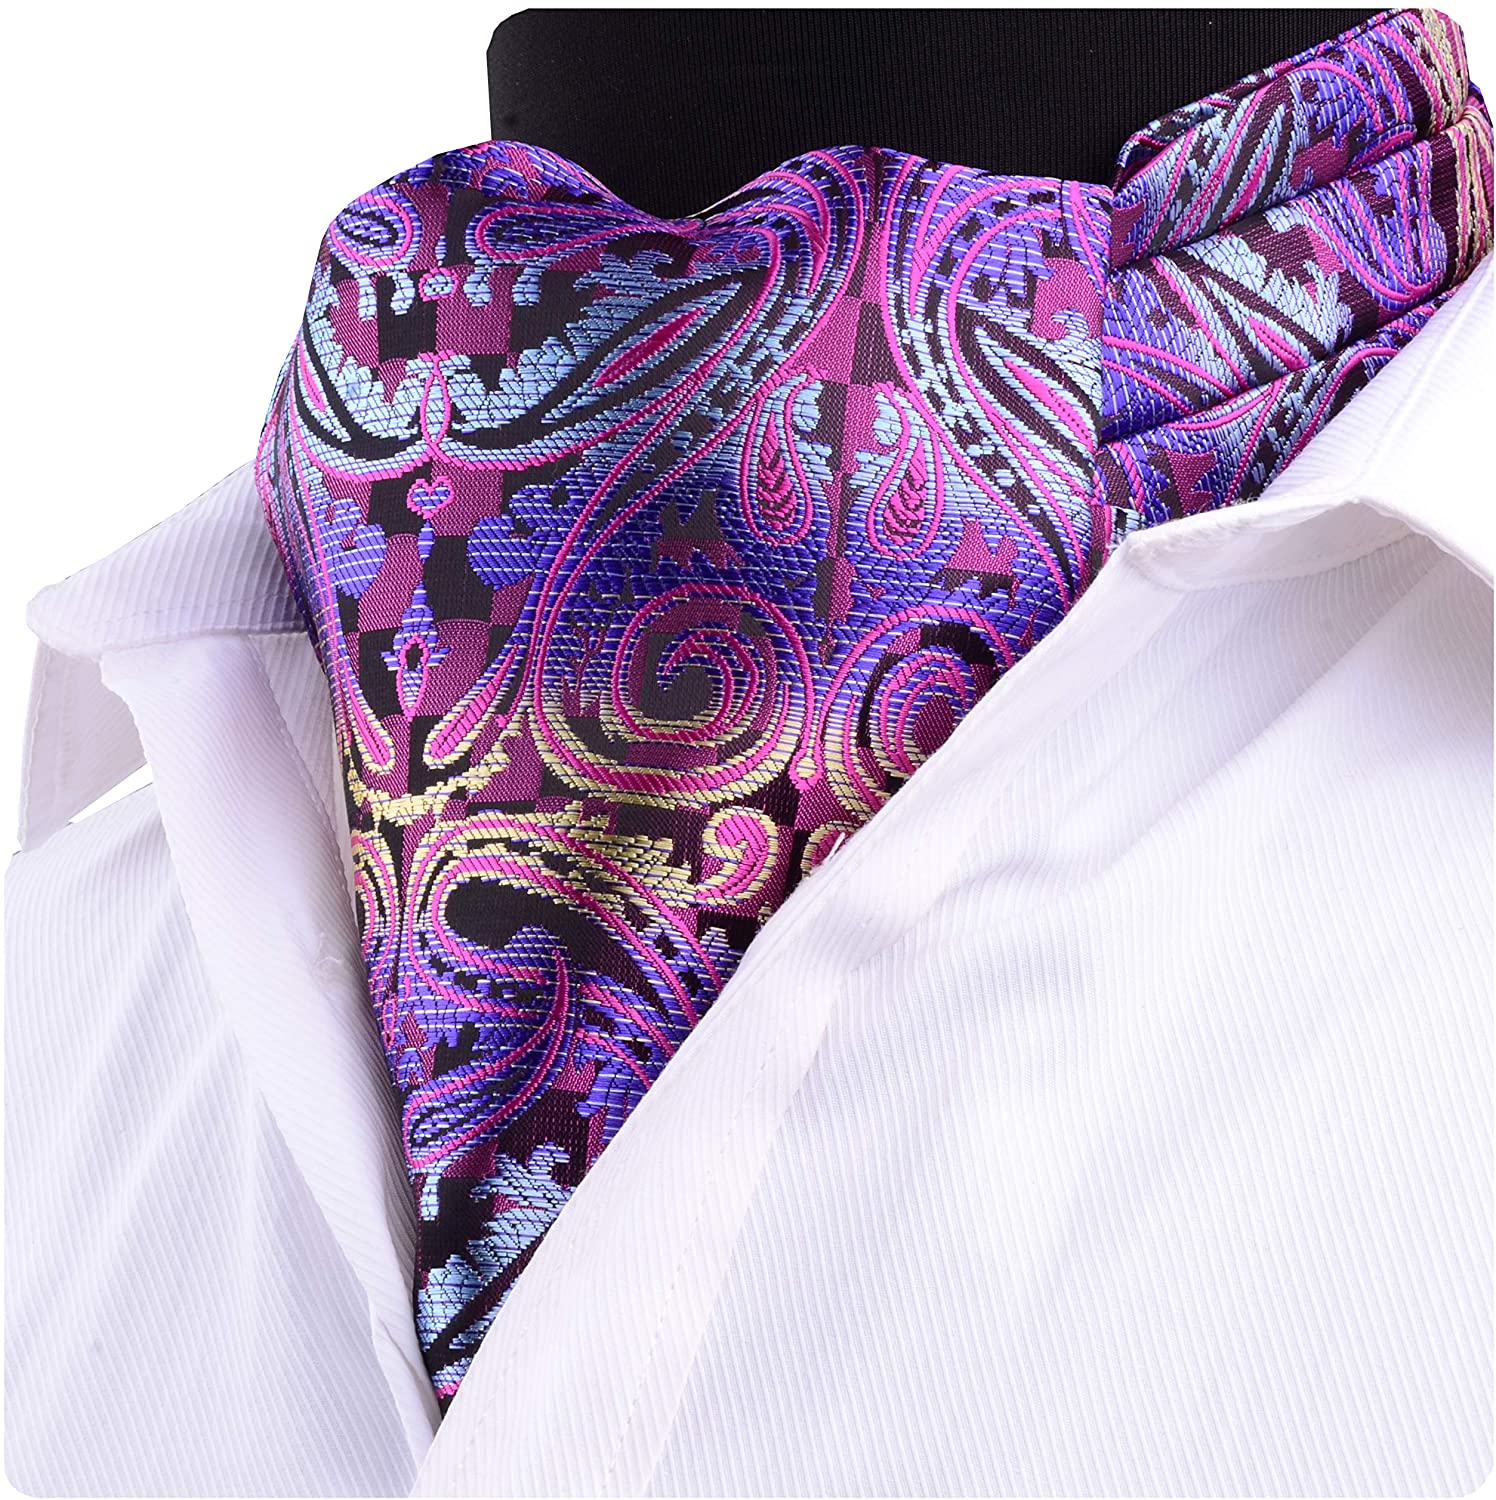 GUSLESON Men's Cravat Self Tie Paisley Jacquard Woven Floral Luxury Ascot